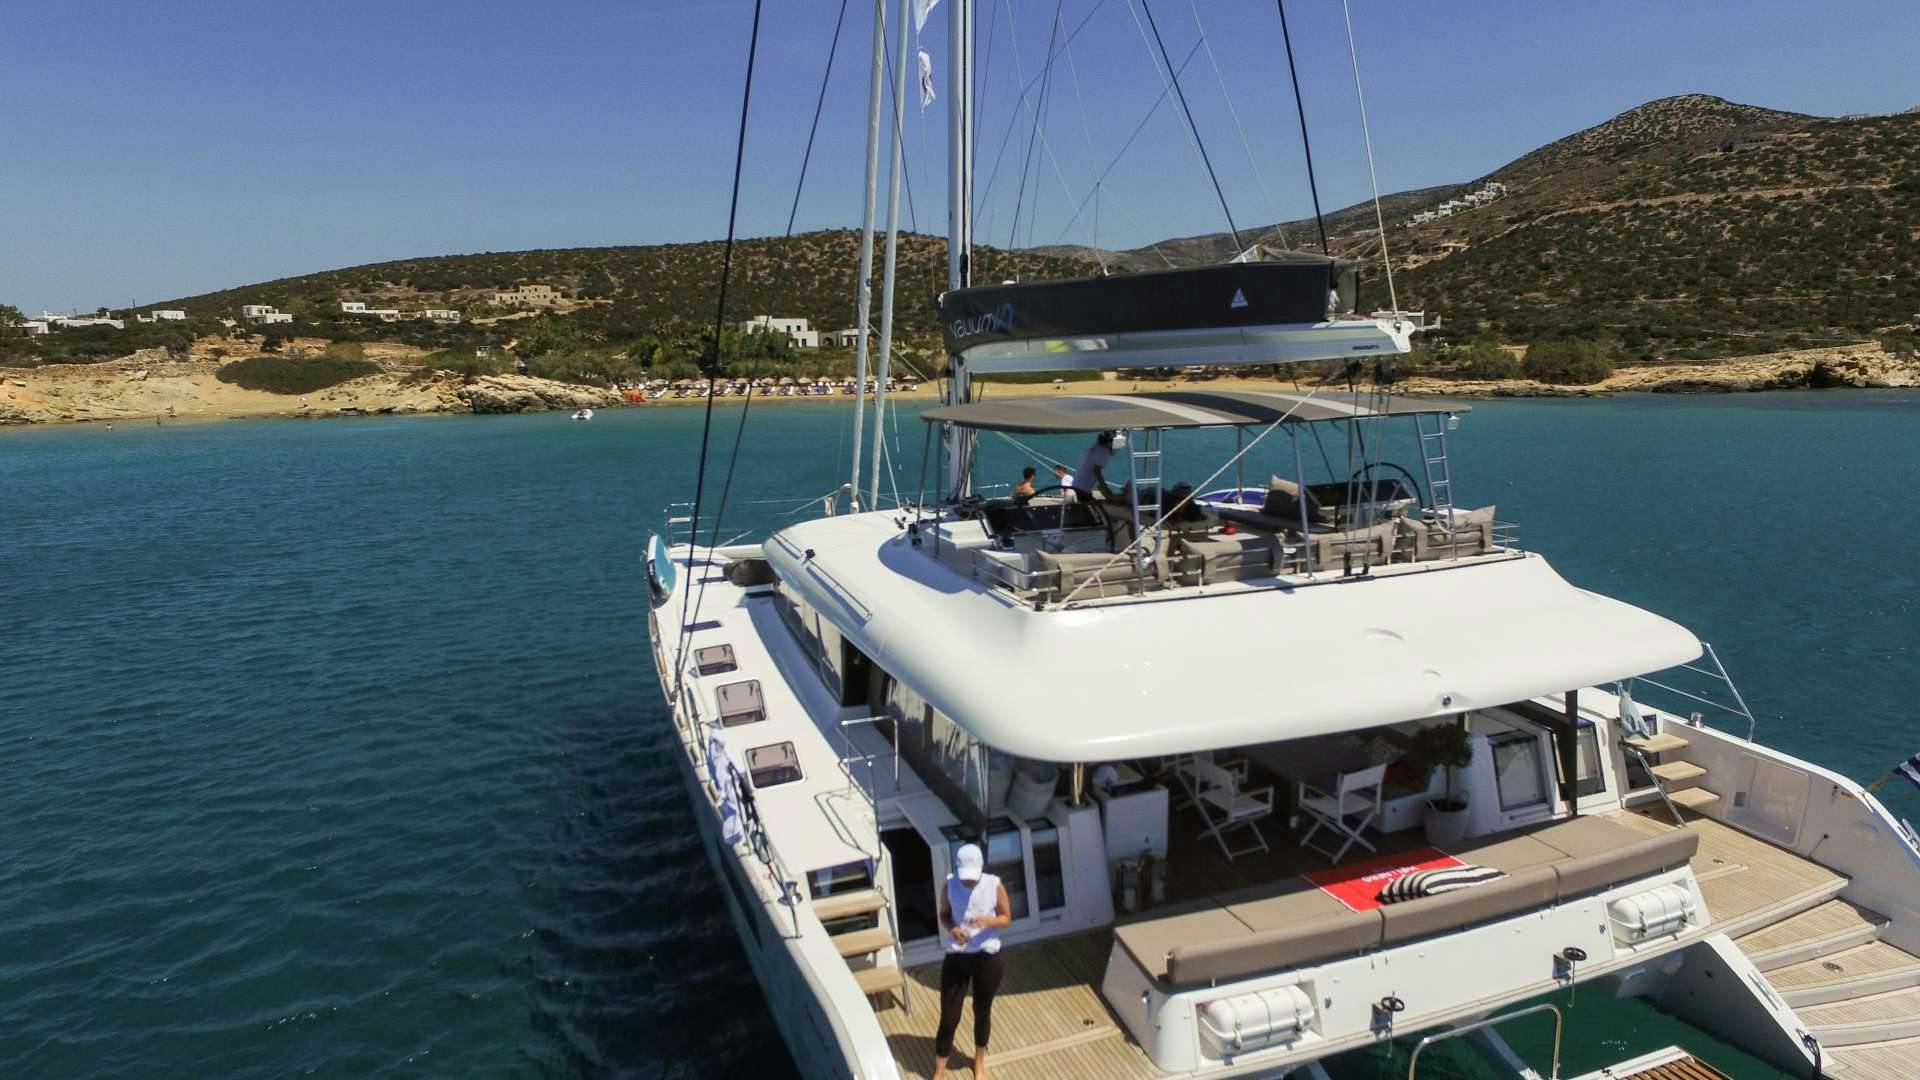 valium62 - Yacht Charter Zakynthos & Boat hire in Greece 1